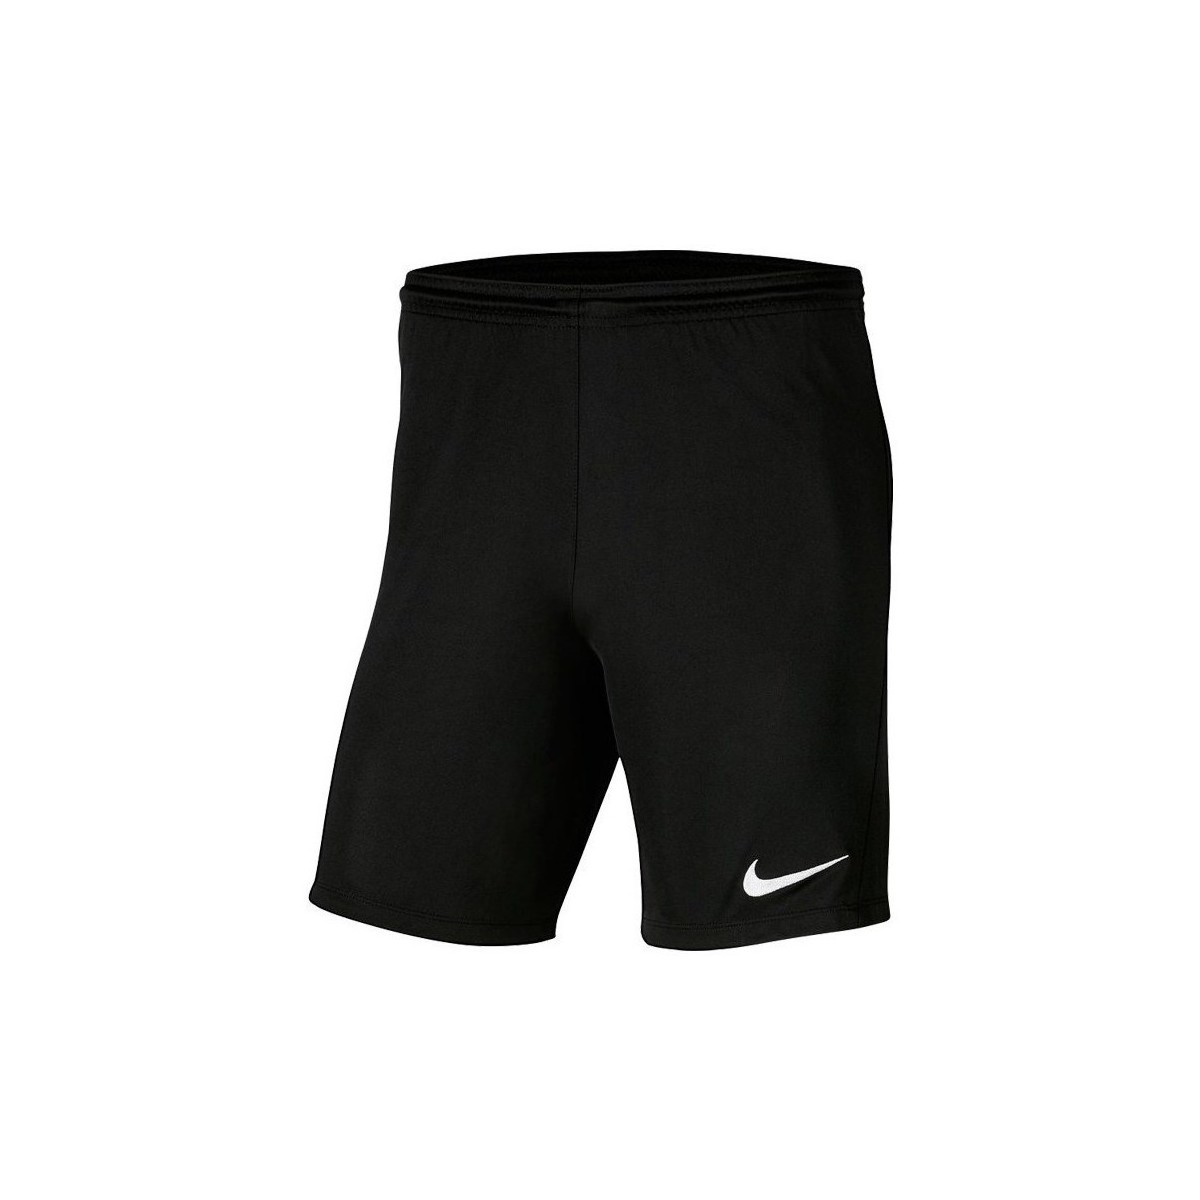 Îmbracaminte Bărbați Pantaloni trei sferturi Nike Dry Park Iii Negru